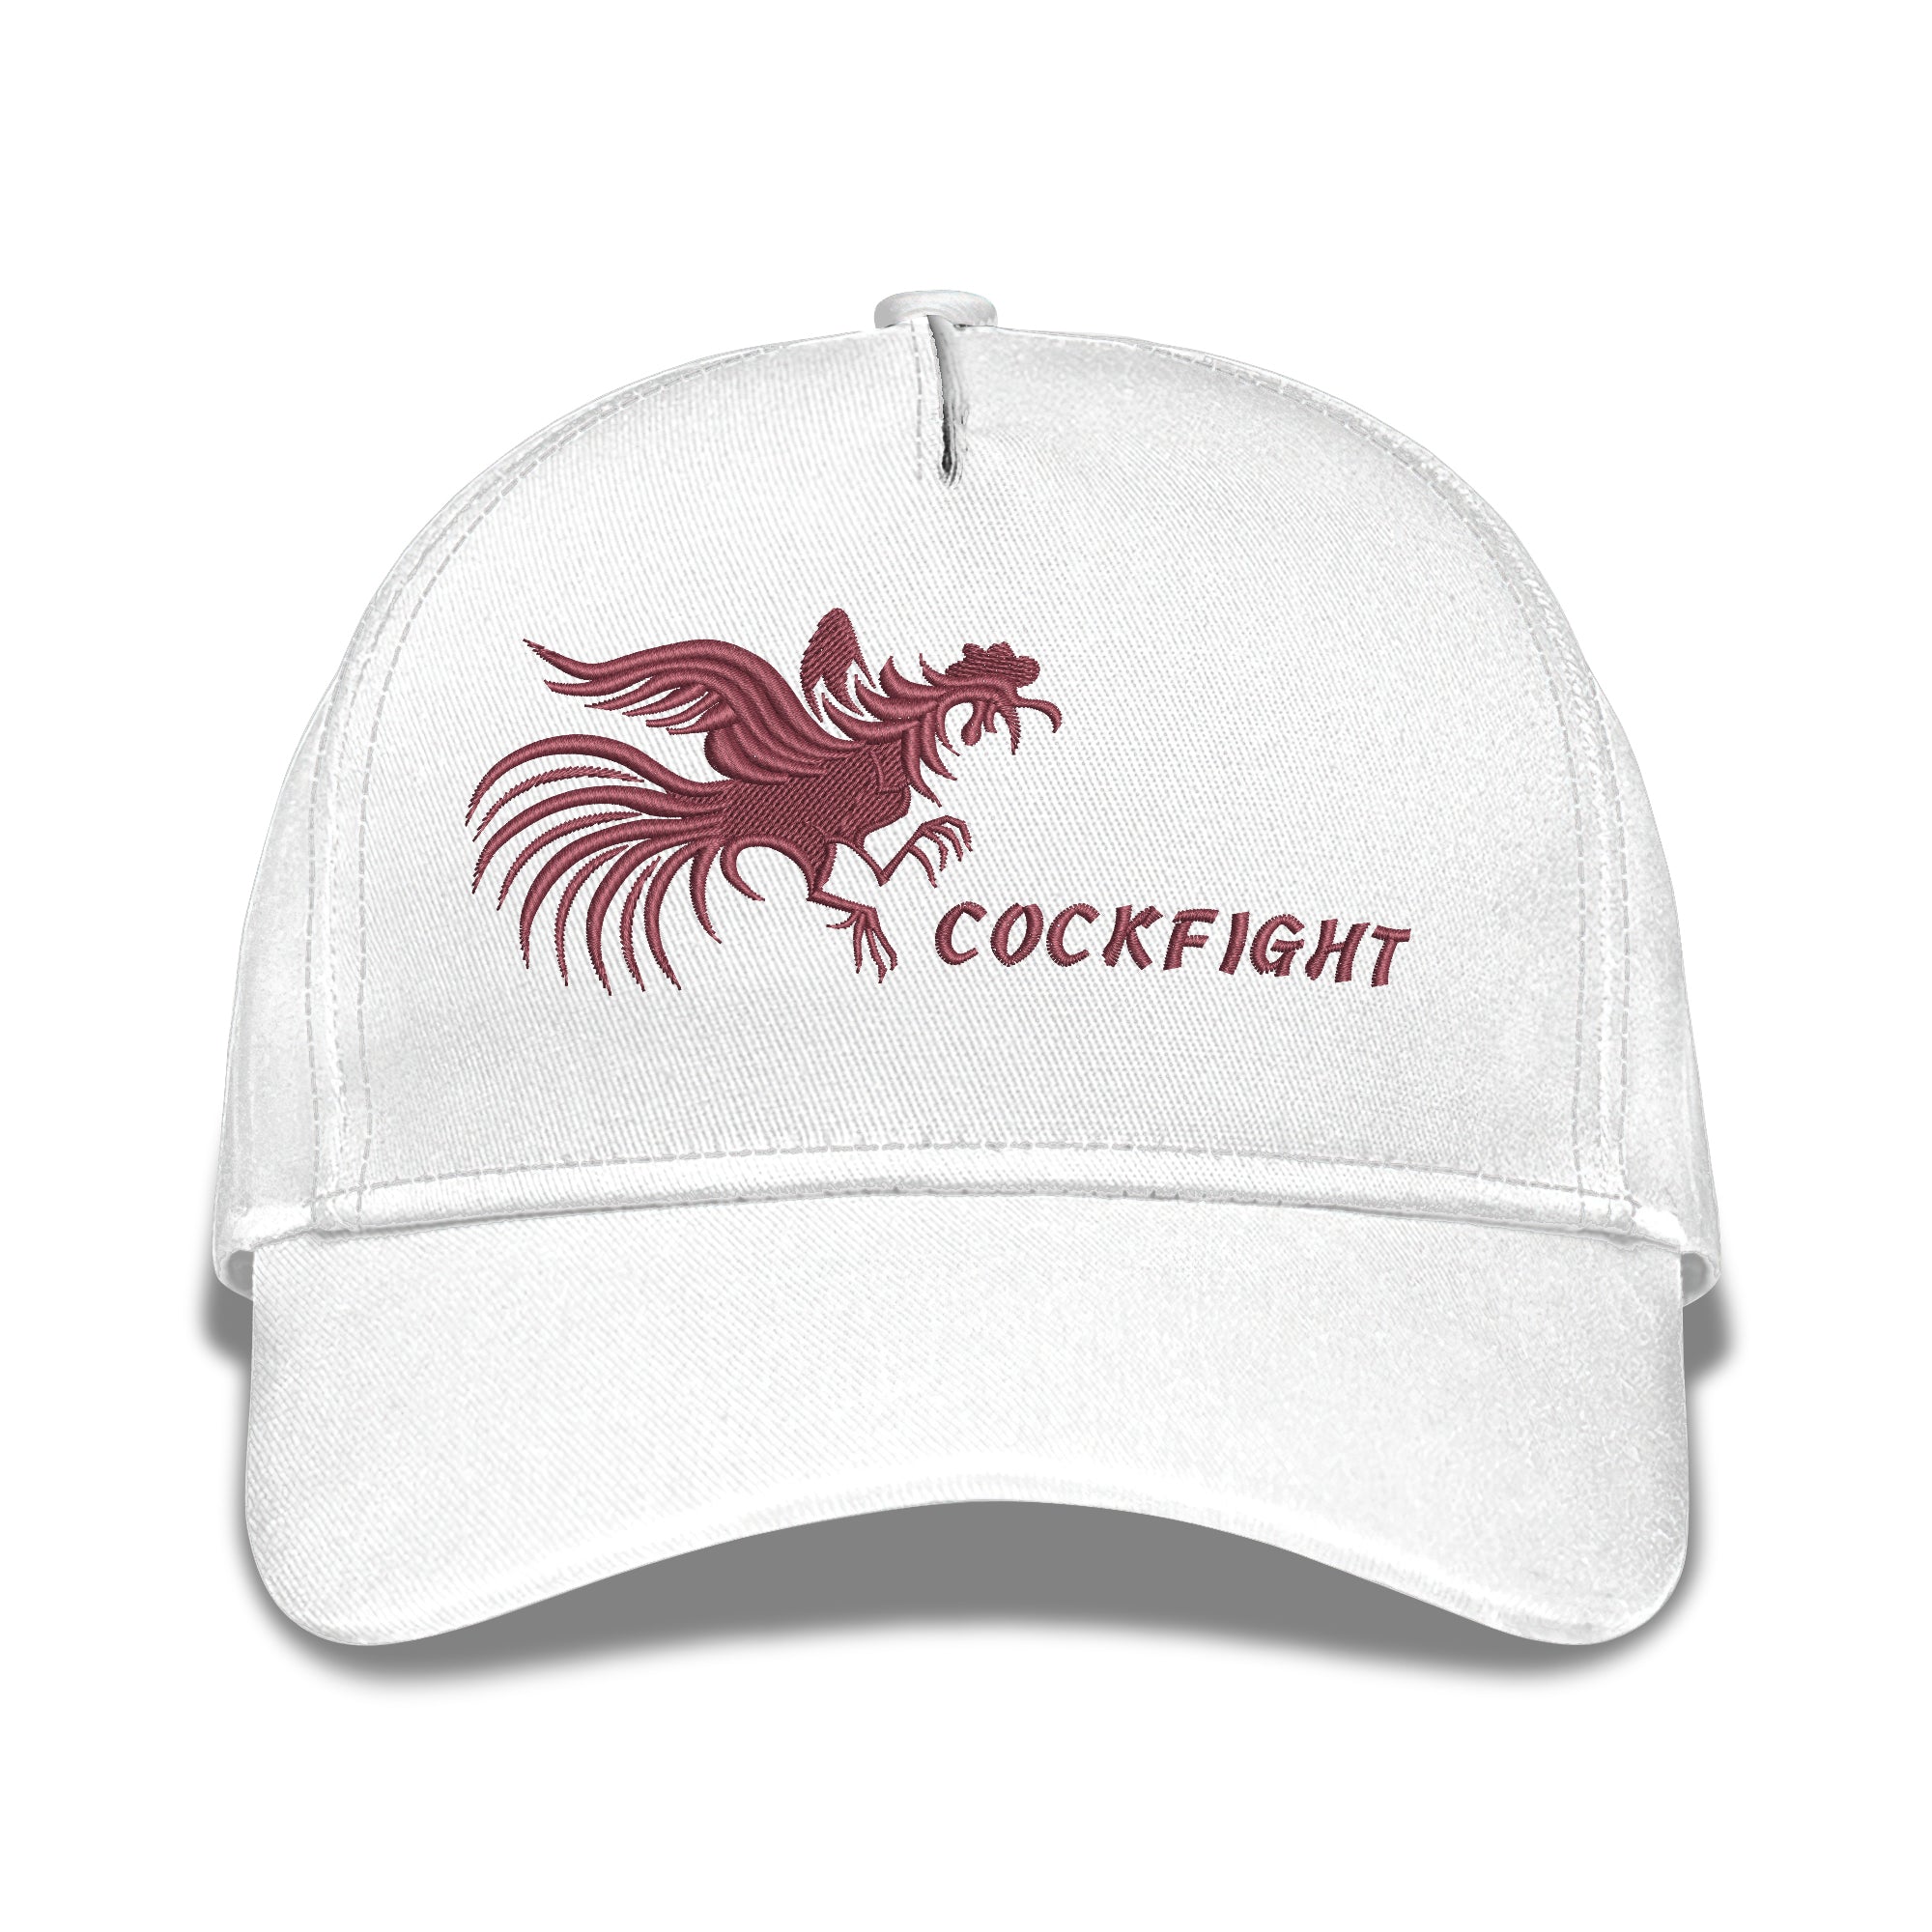 Cockfight Embroidered Baseball Caps